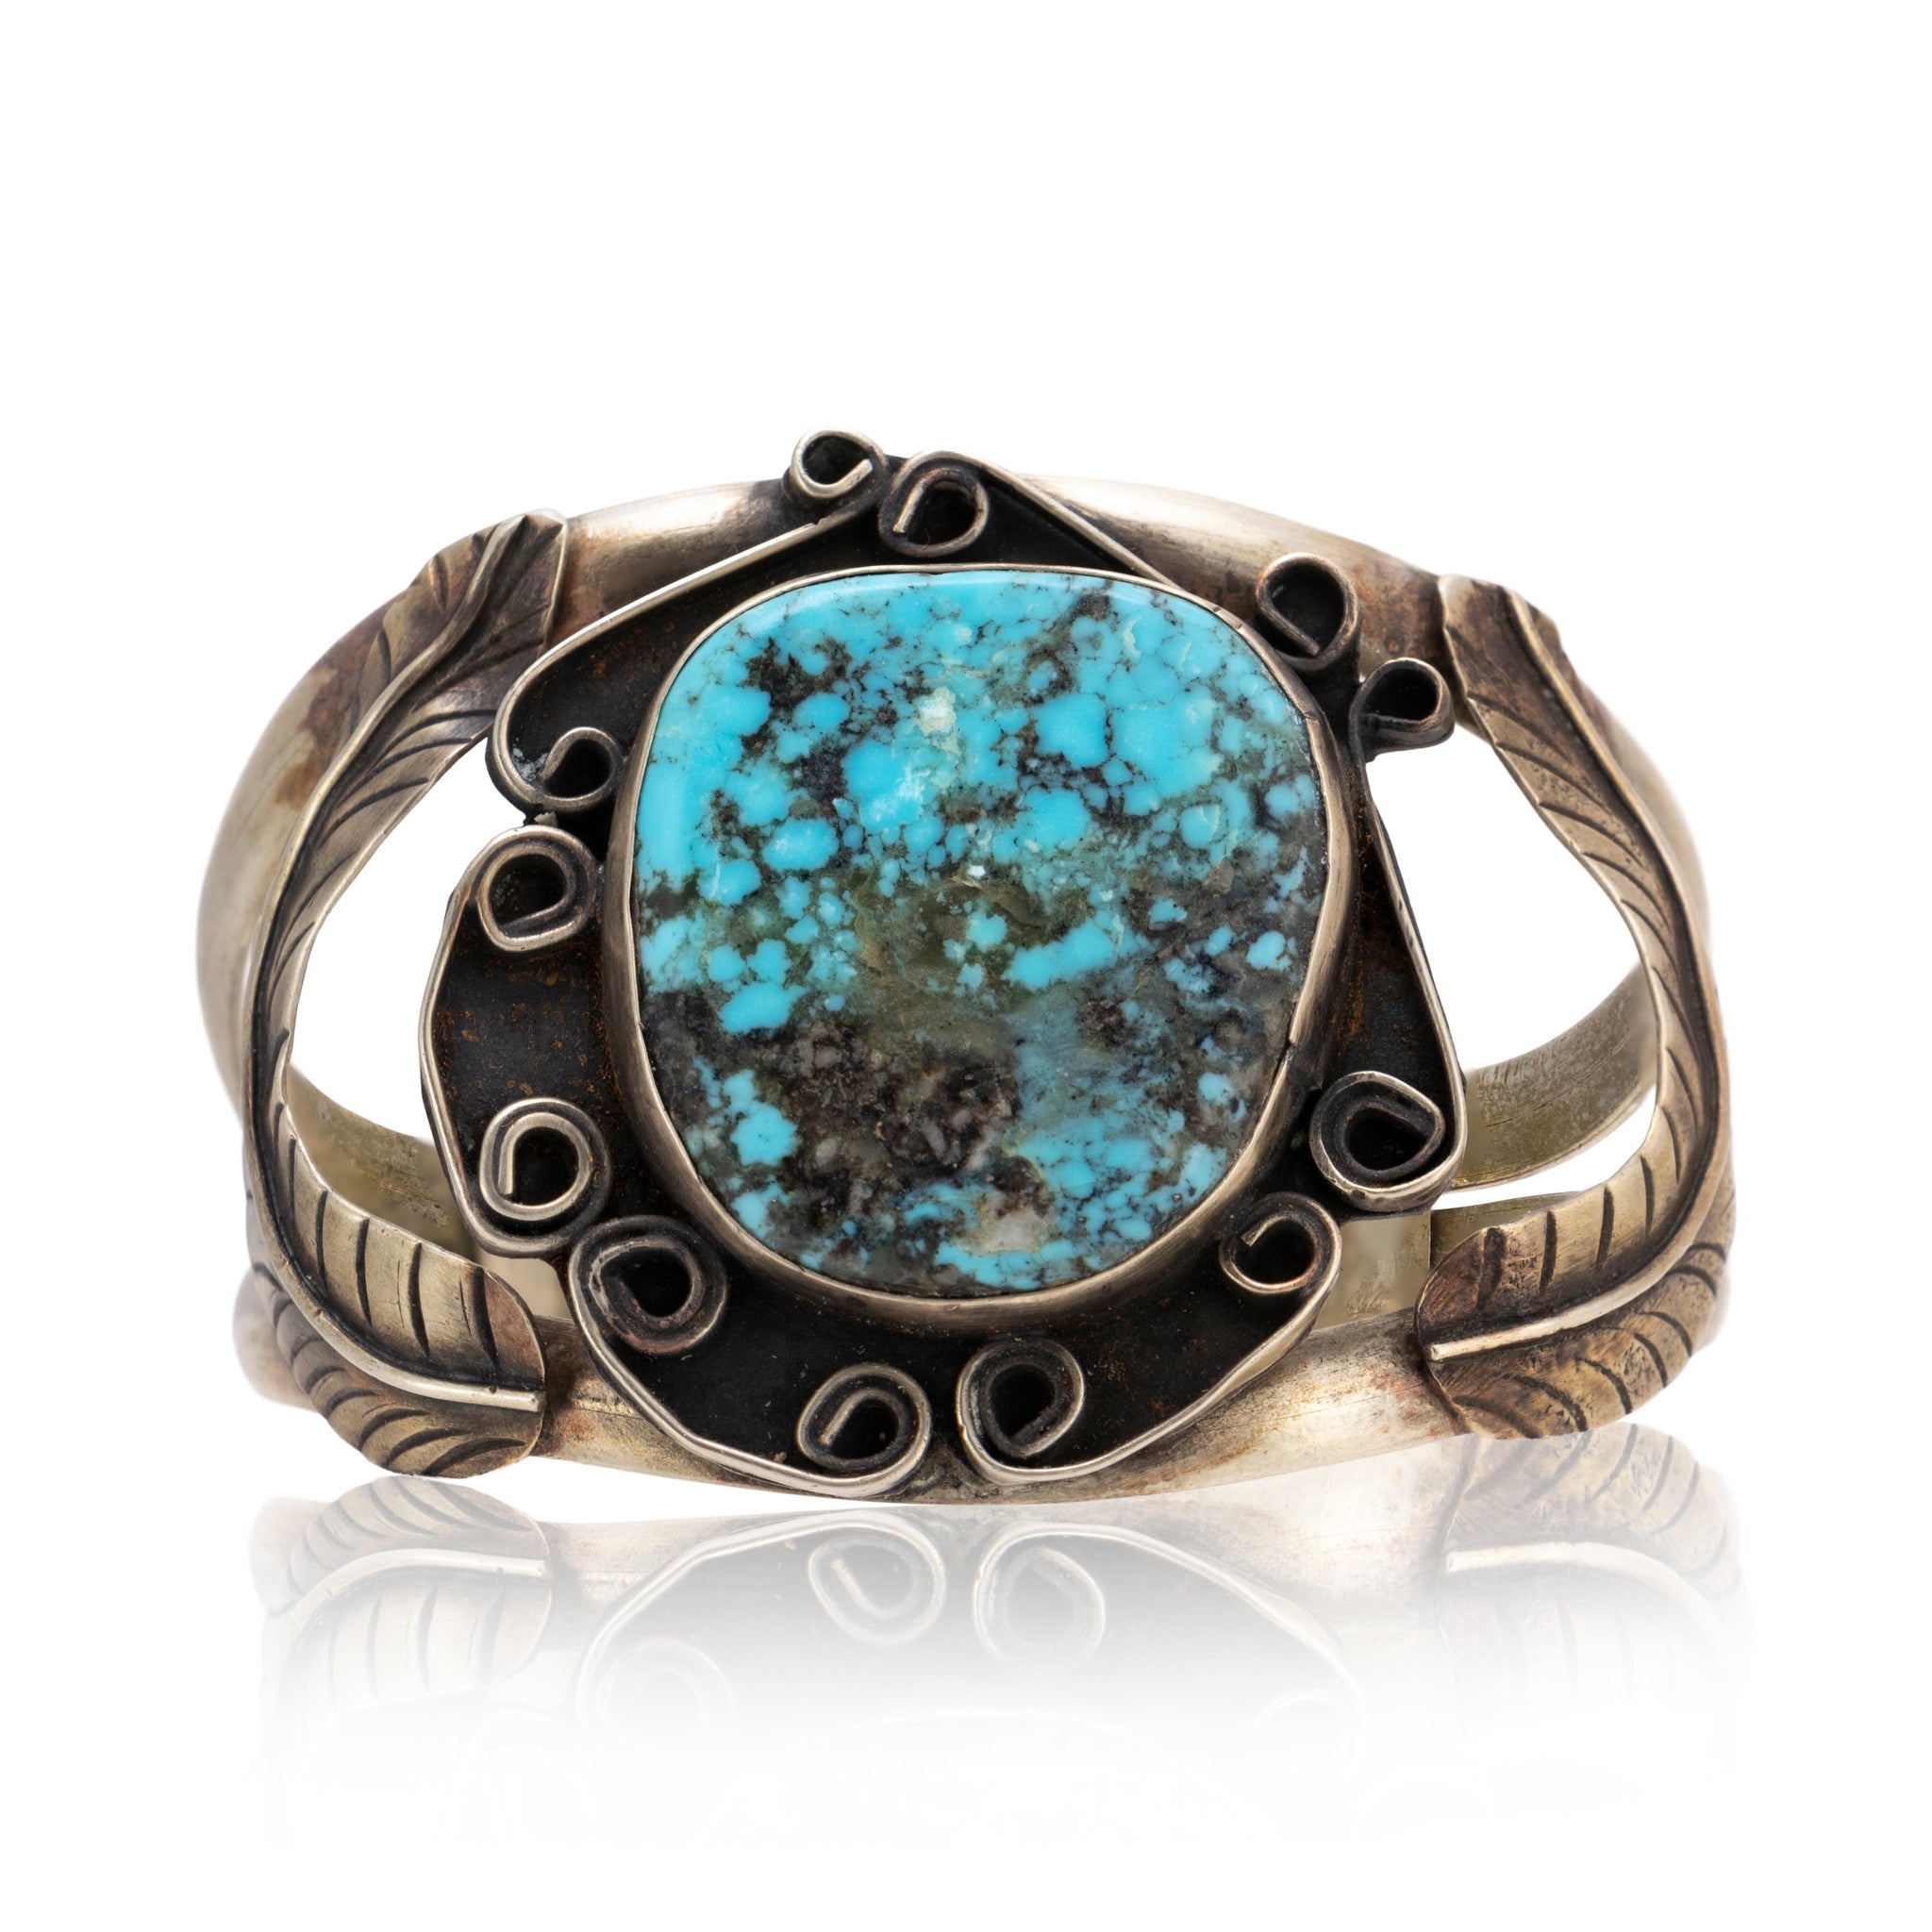 Navajo Turquoise Bracelet, Jewelry, Bracelet, Native